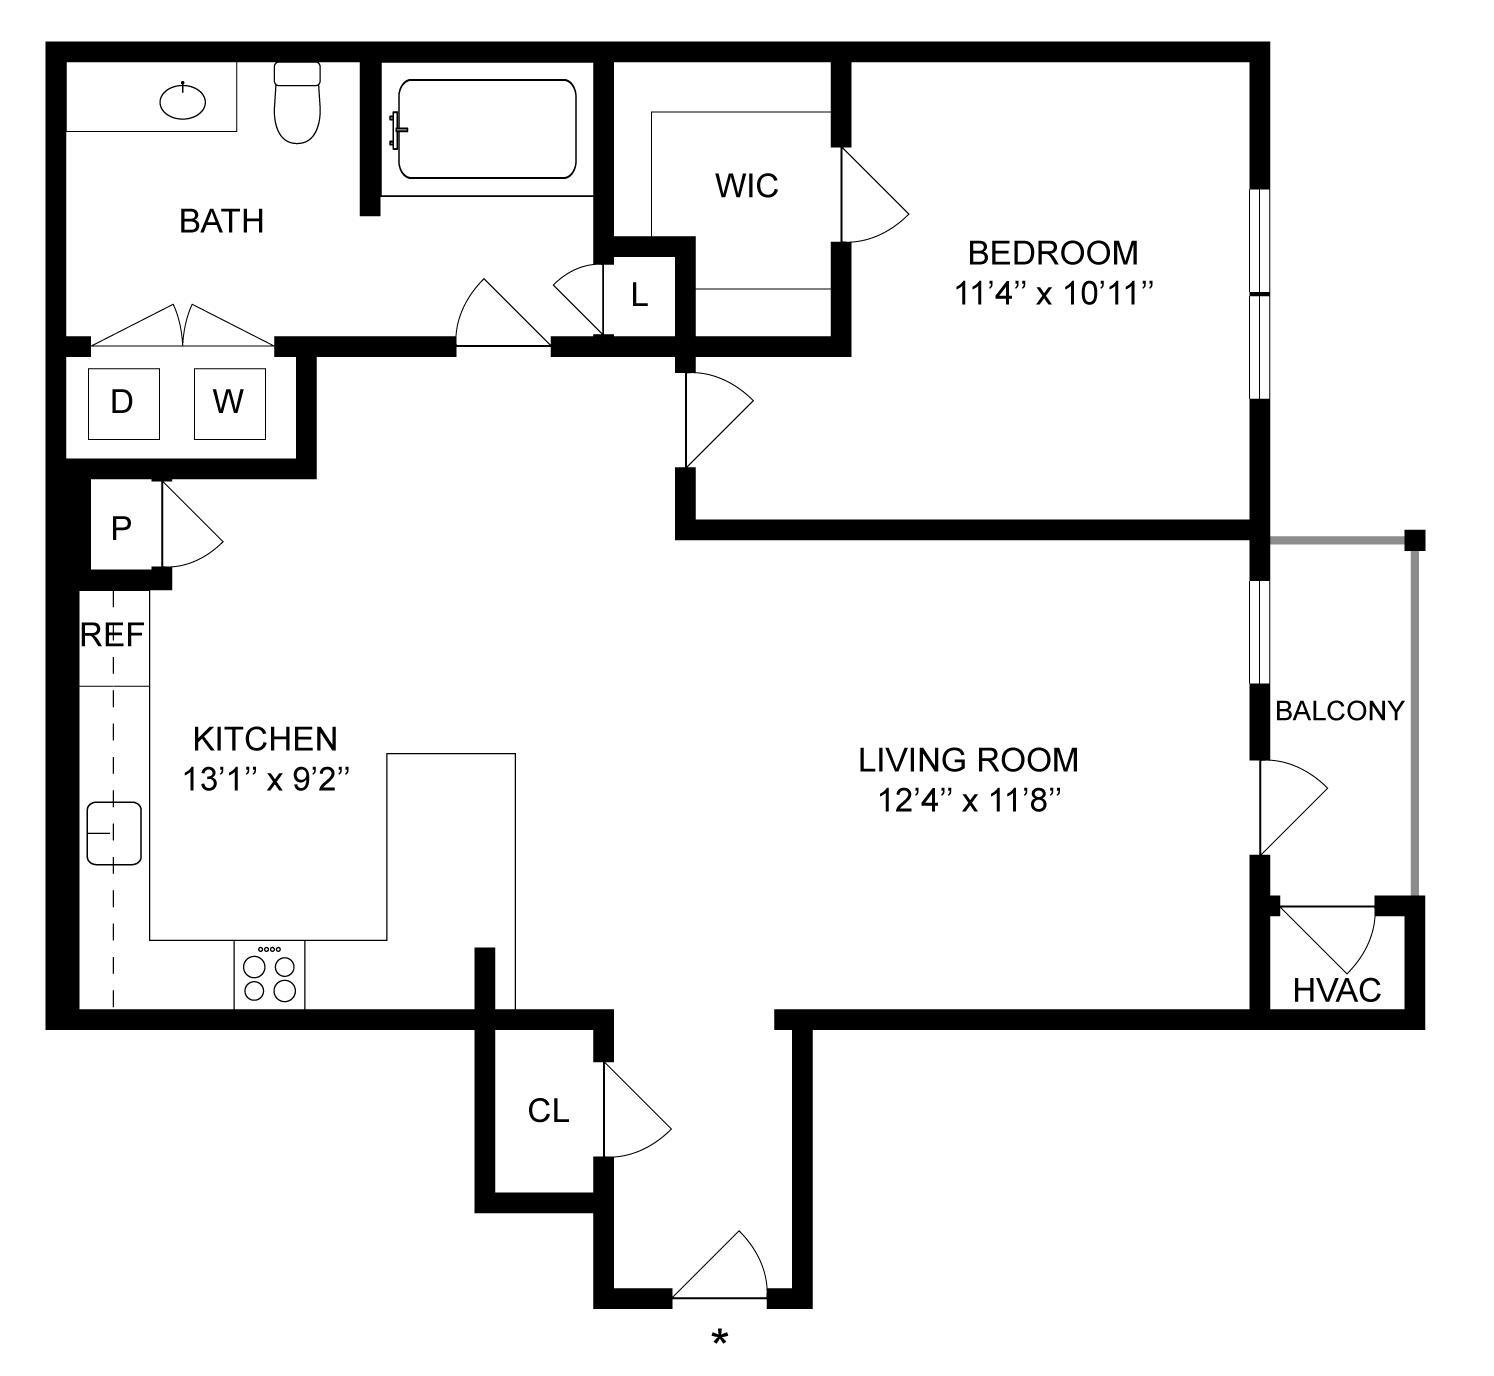 Floorplan for Apartment #01-B23, 1 bedroom unit at Halstead Hopkinton